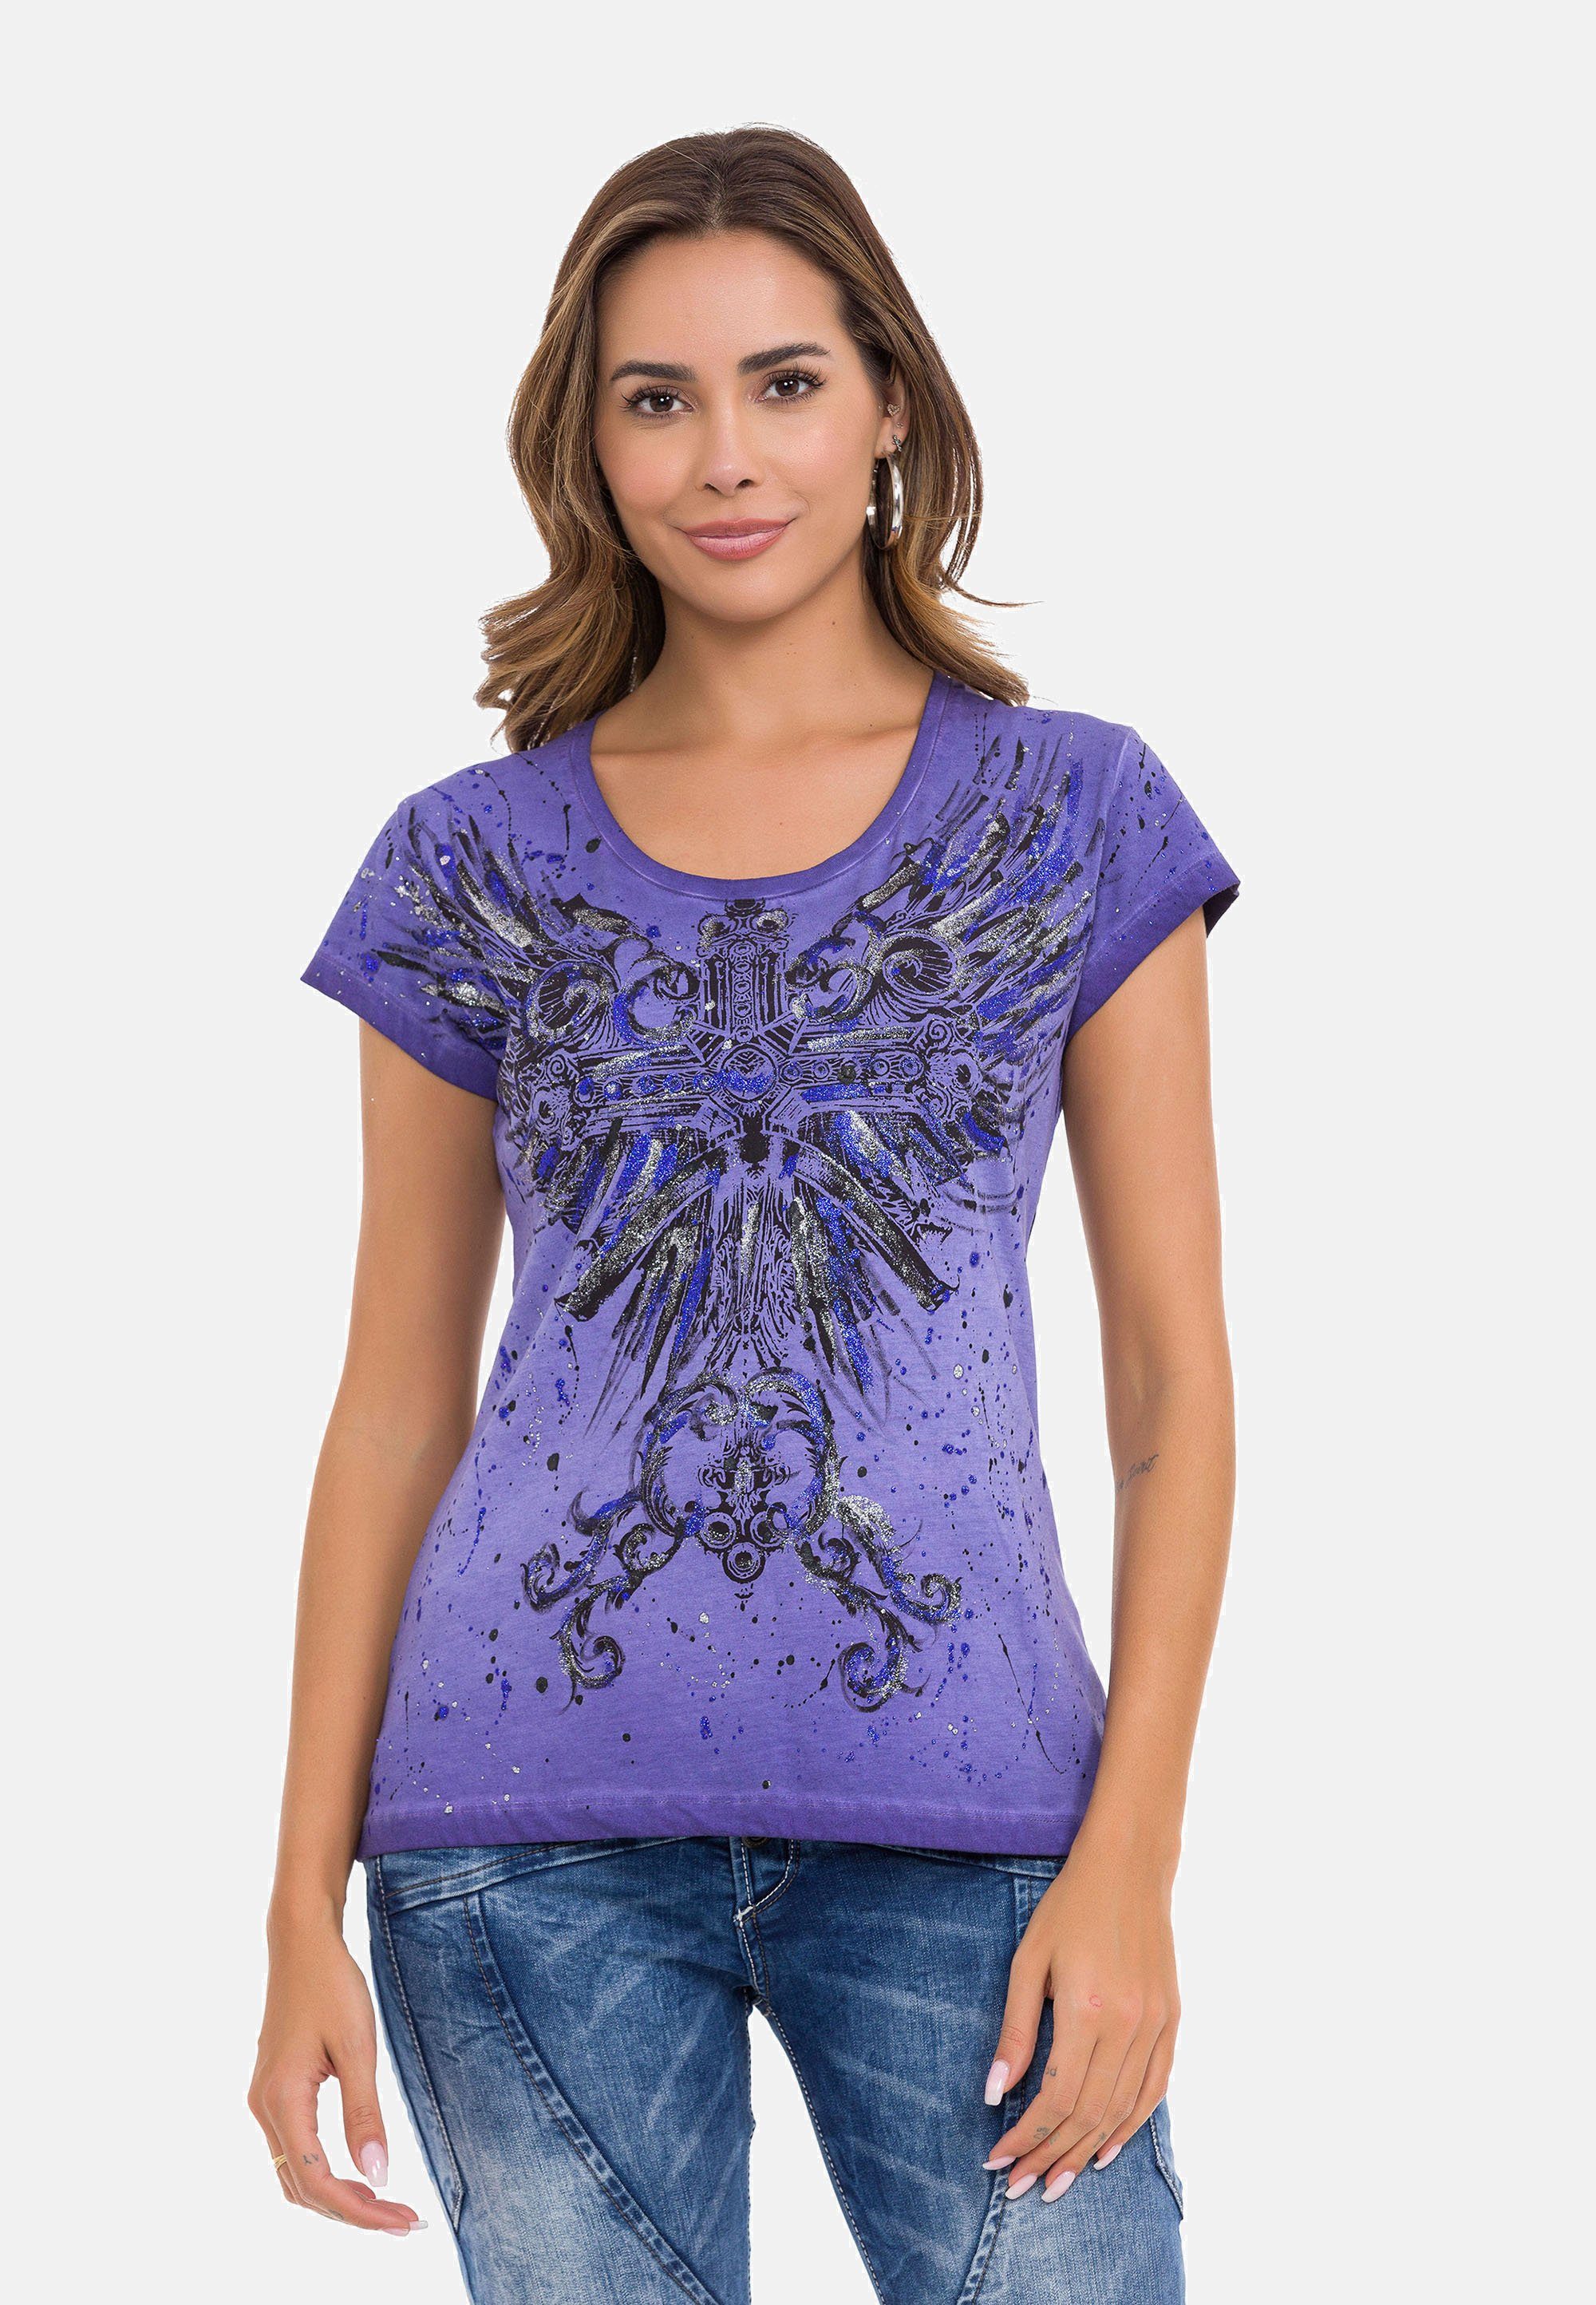 [Jetzt kostenloser Versand!] Cipo & Baxx Print purpurviolett T-Shirt mit großflächiger